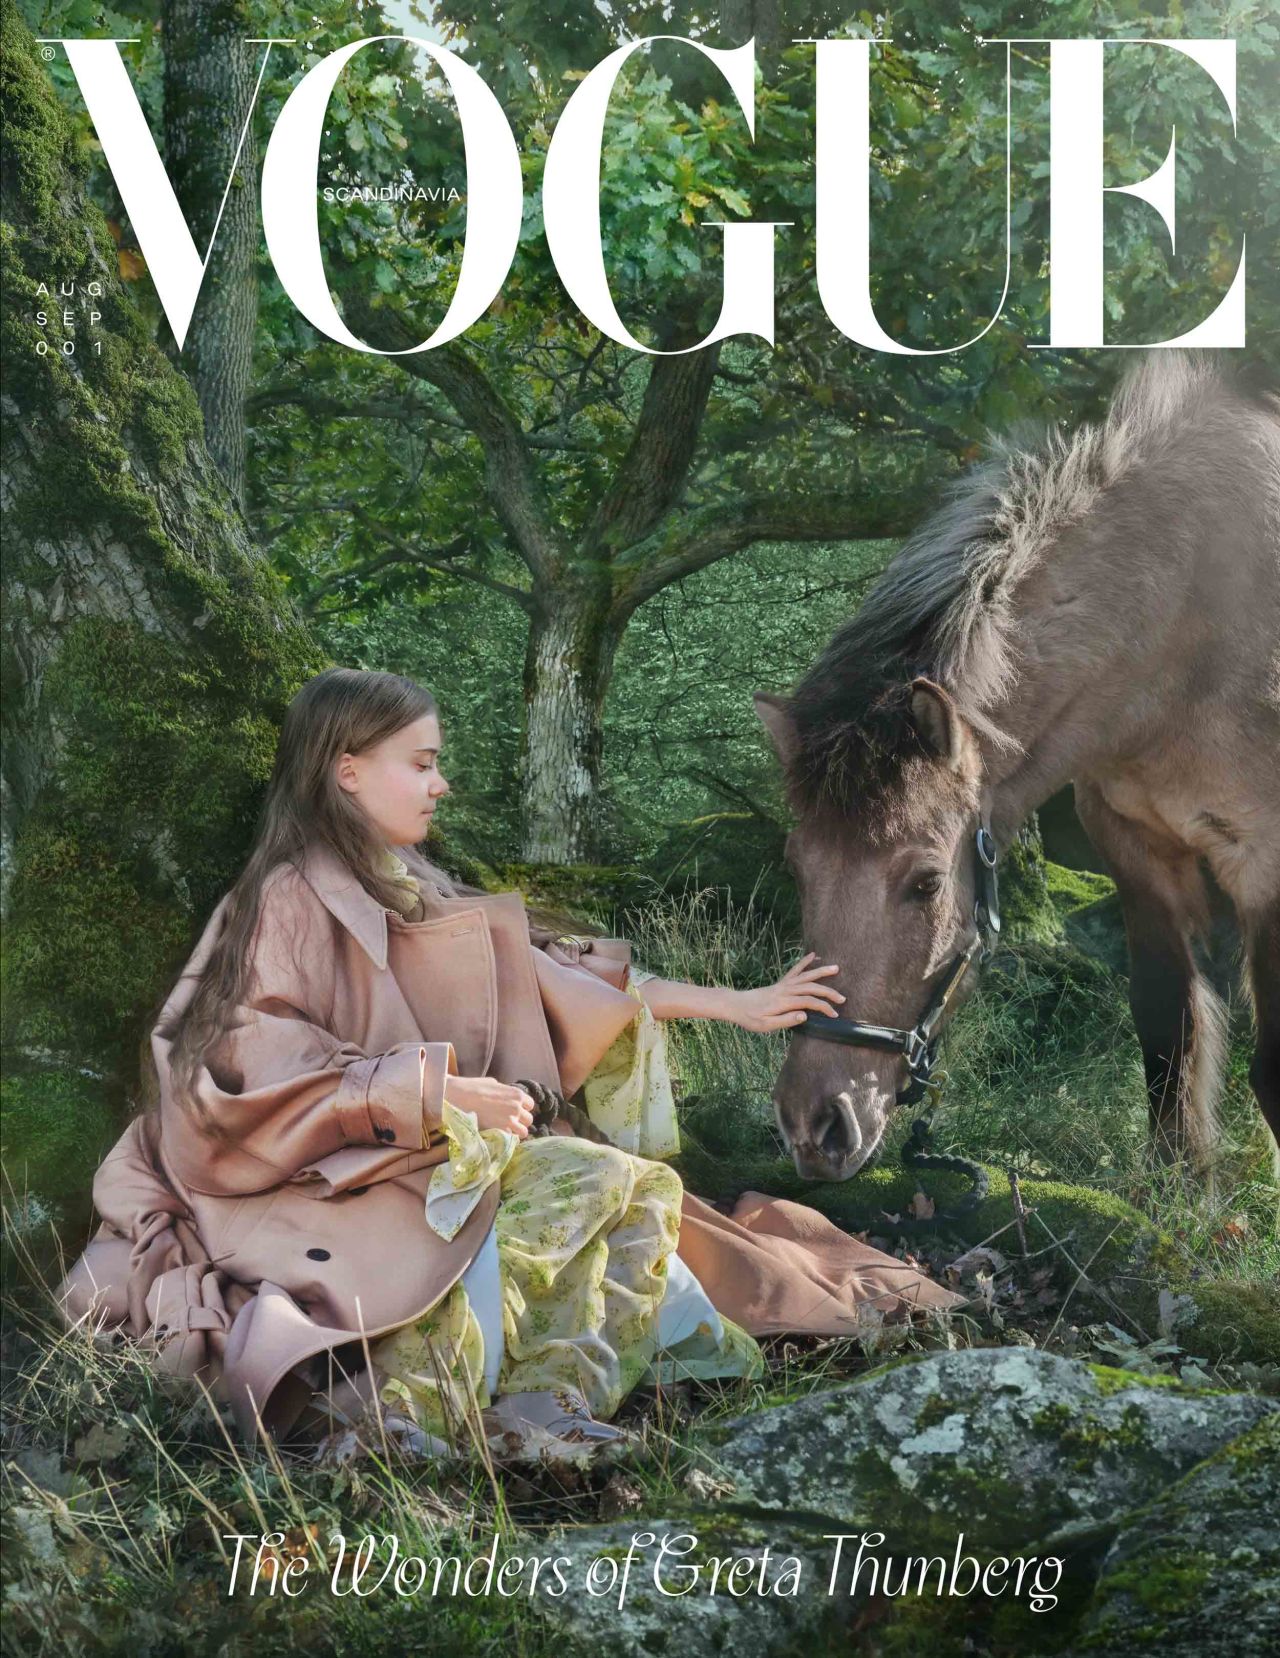 Greta Thunberg on the cover of Vogue Scandinavia.